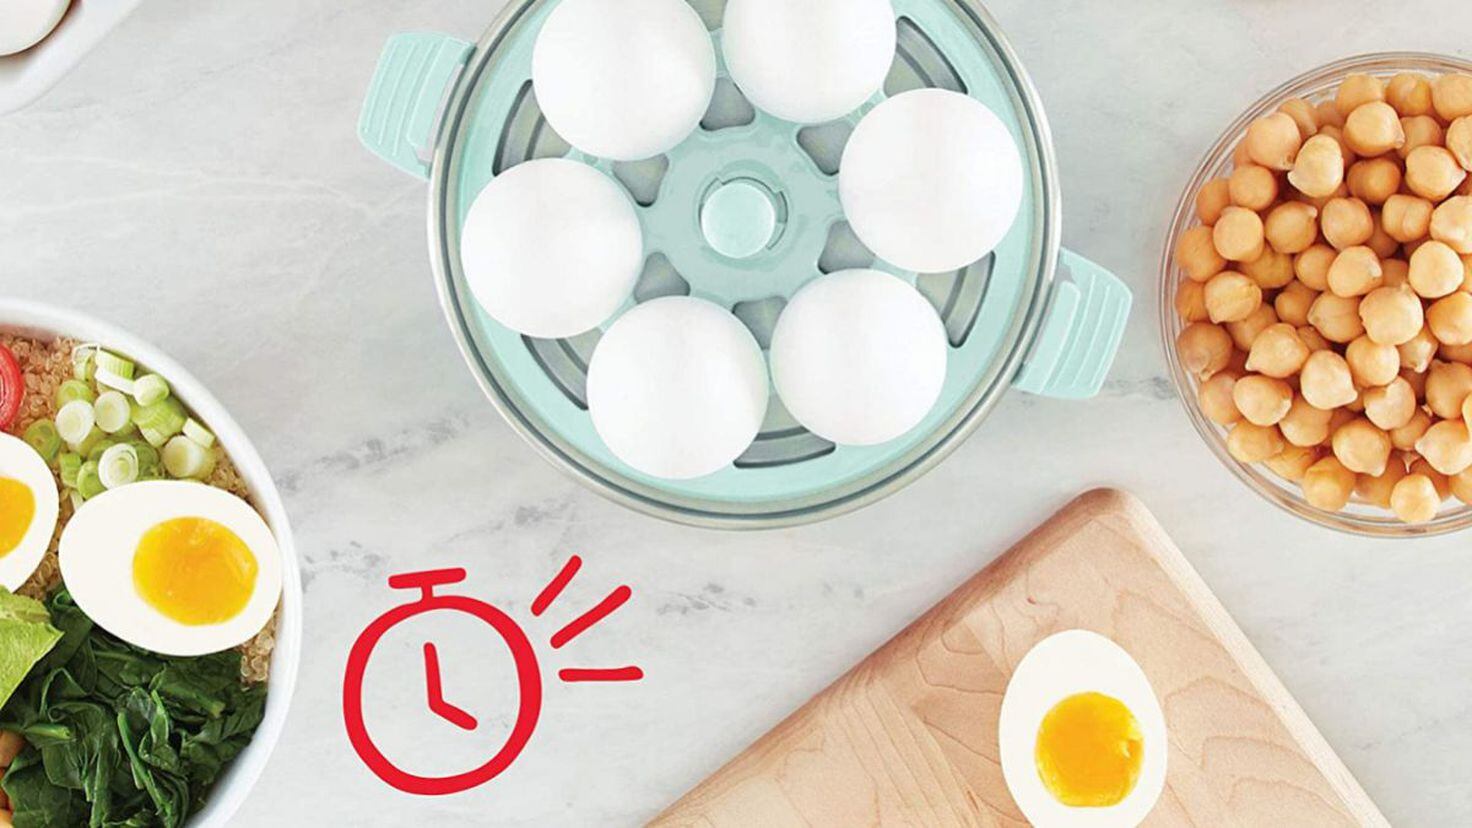 Hervidor de huevos Easy Egg Simple Cook 